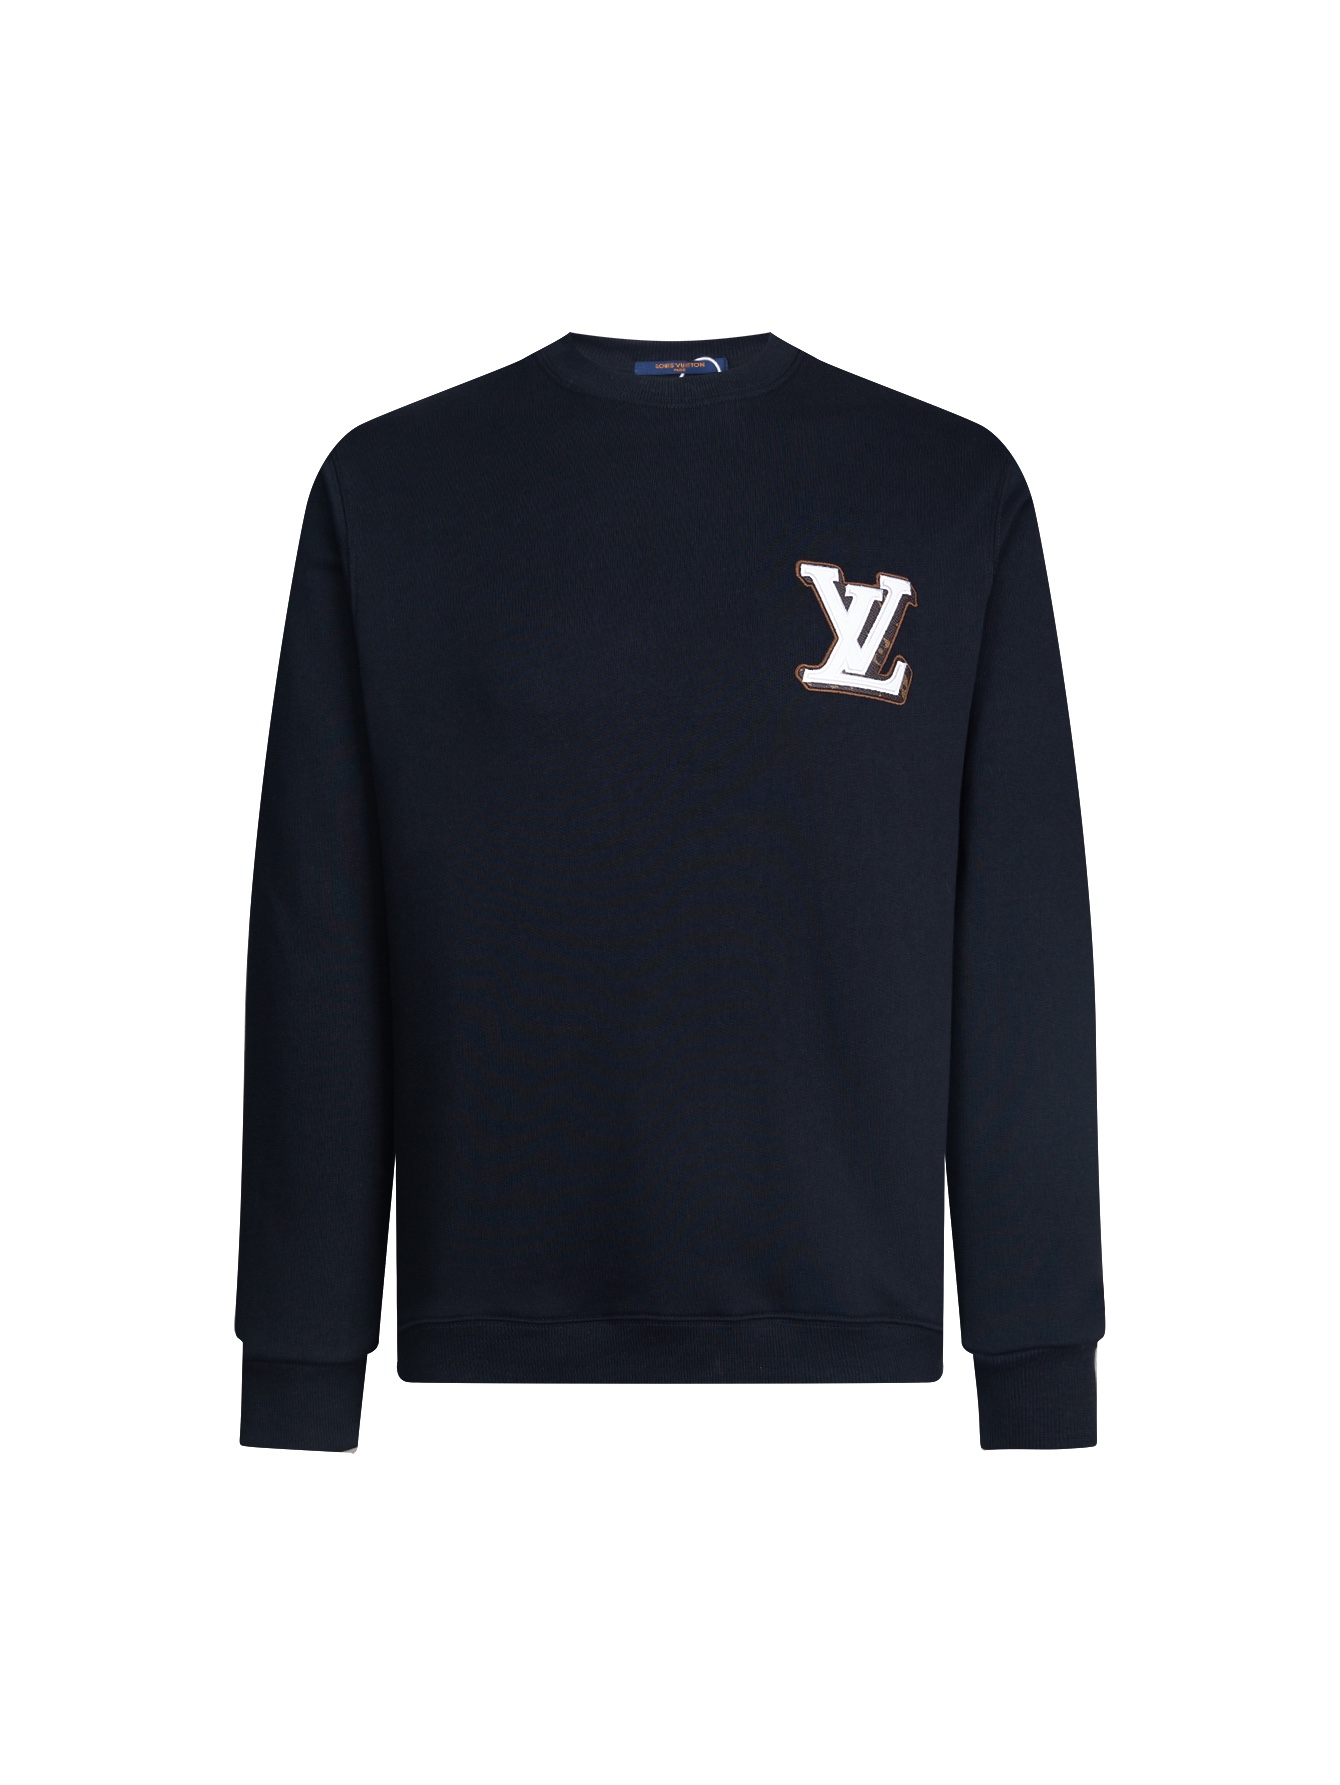 Louis Vuitton Clothing Sweatshirts Black White Embroidery Unisex